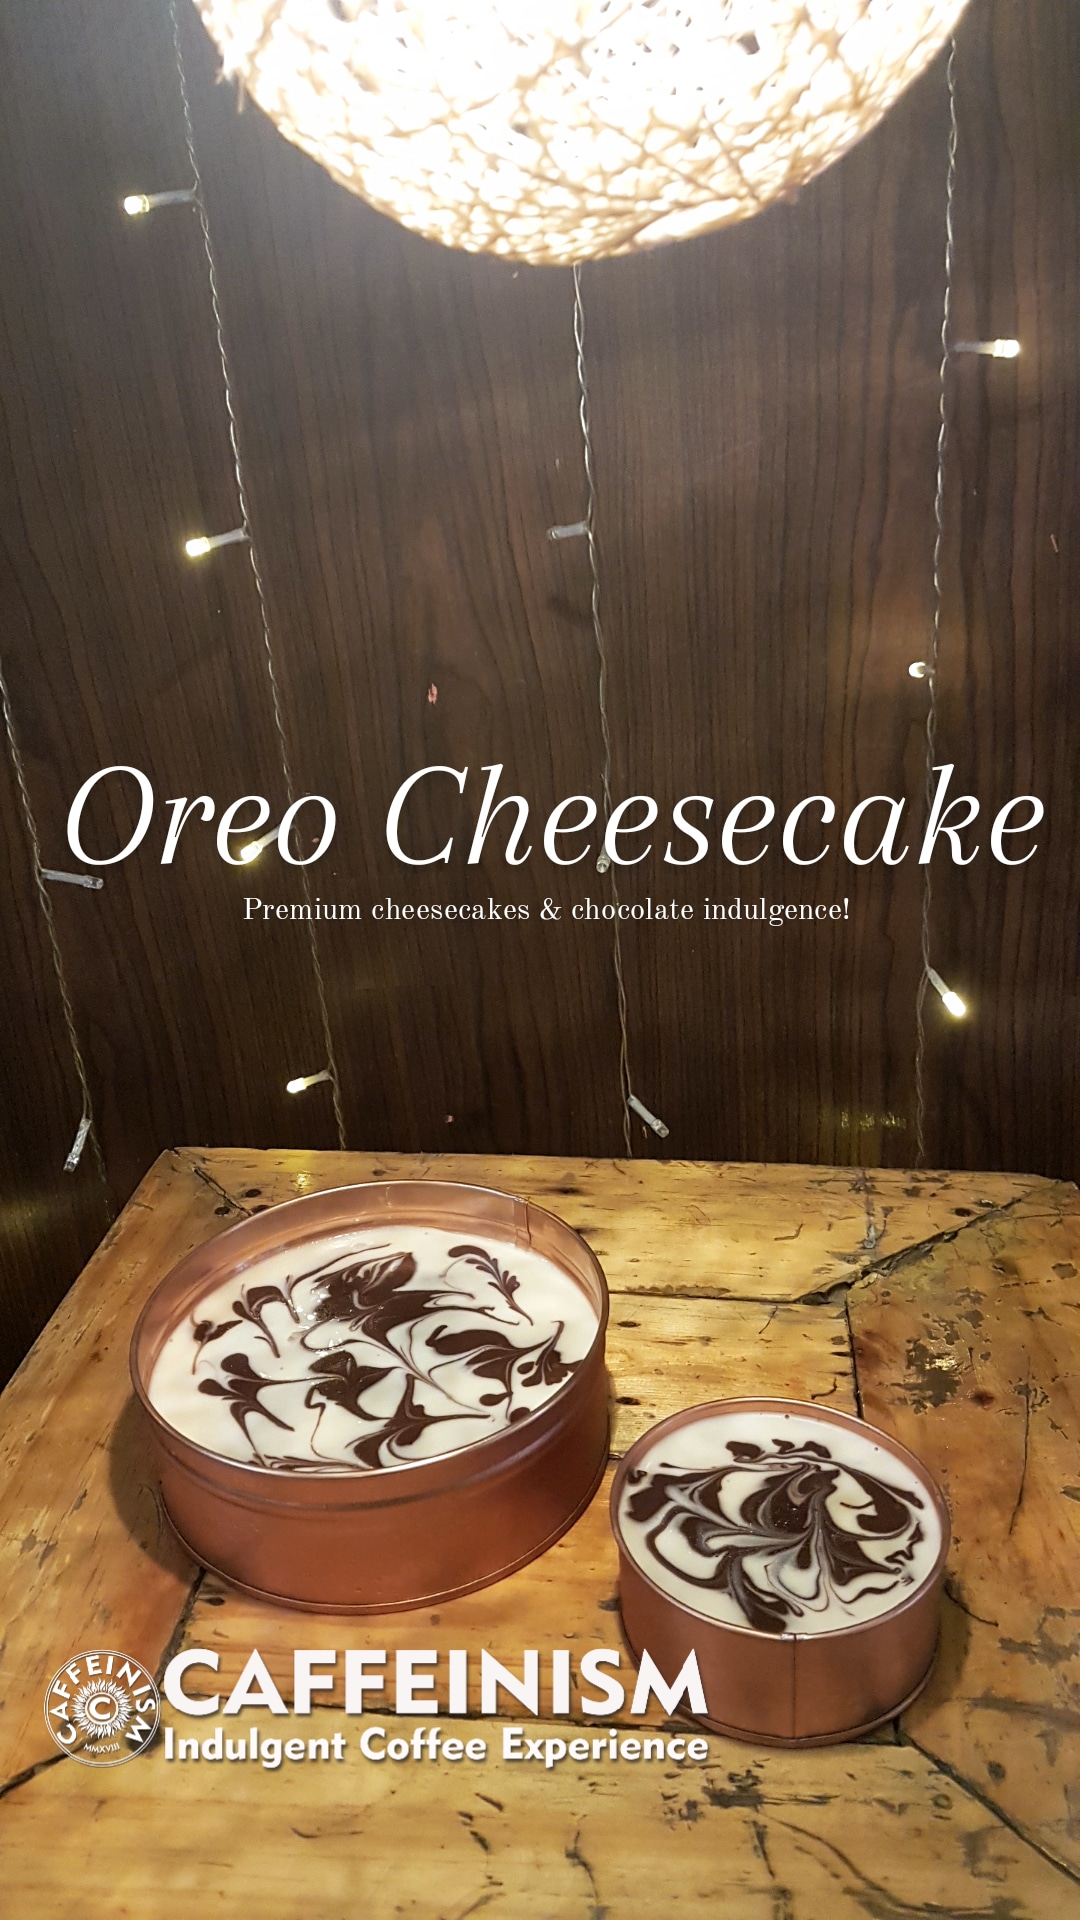 Oreo Cheesecake in Philippines